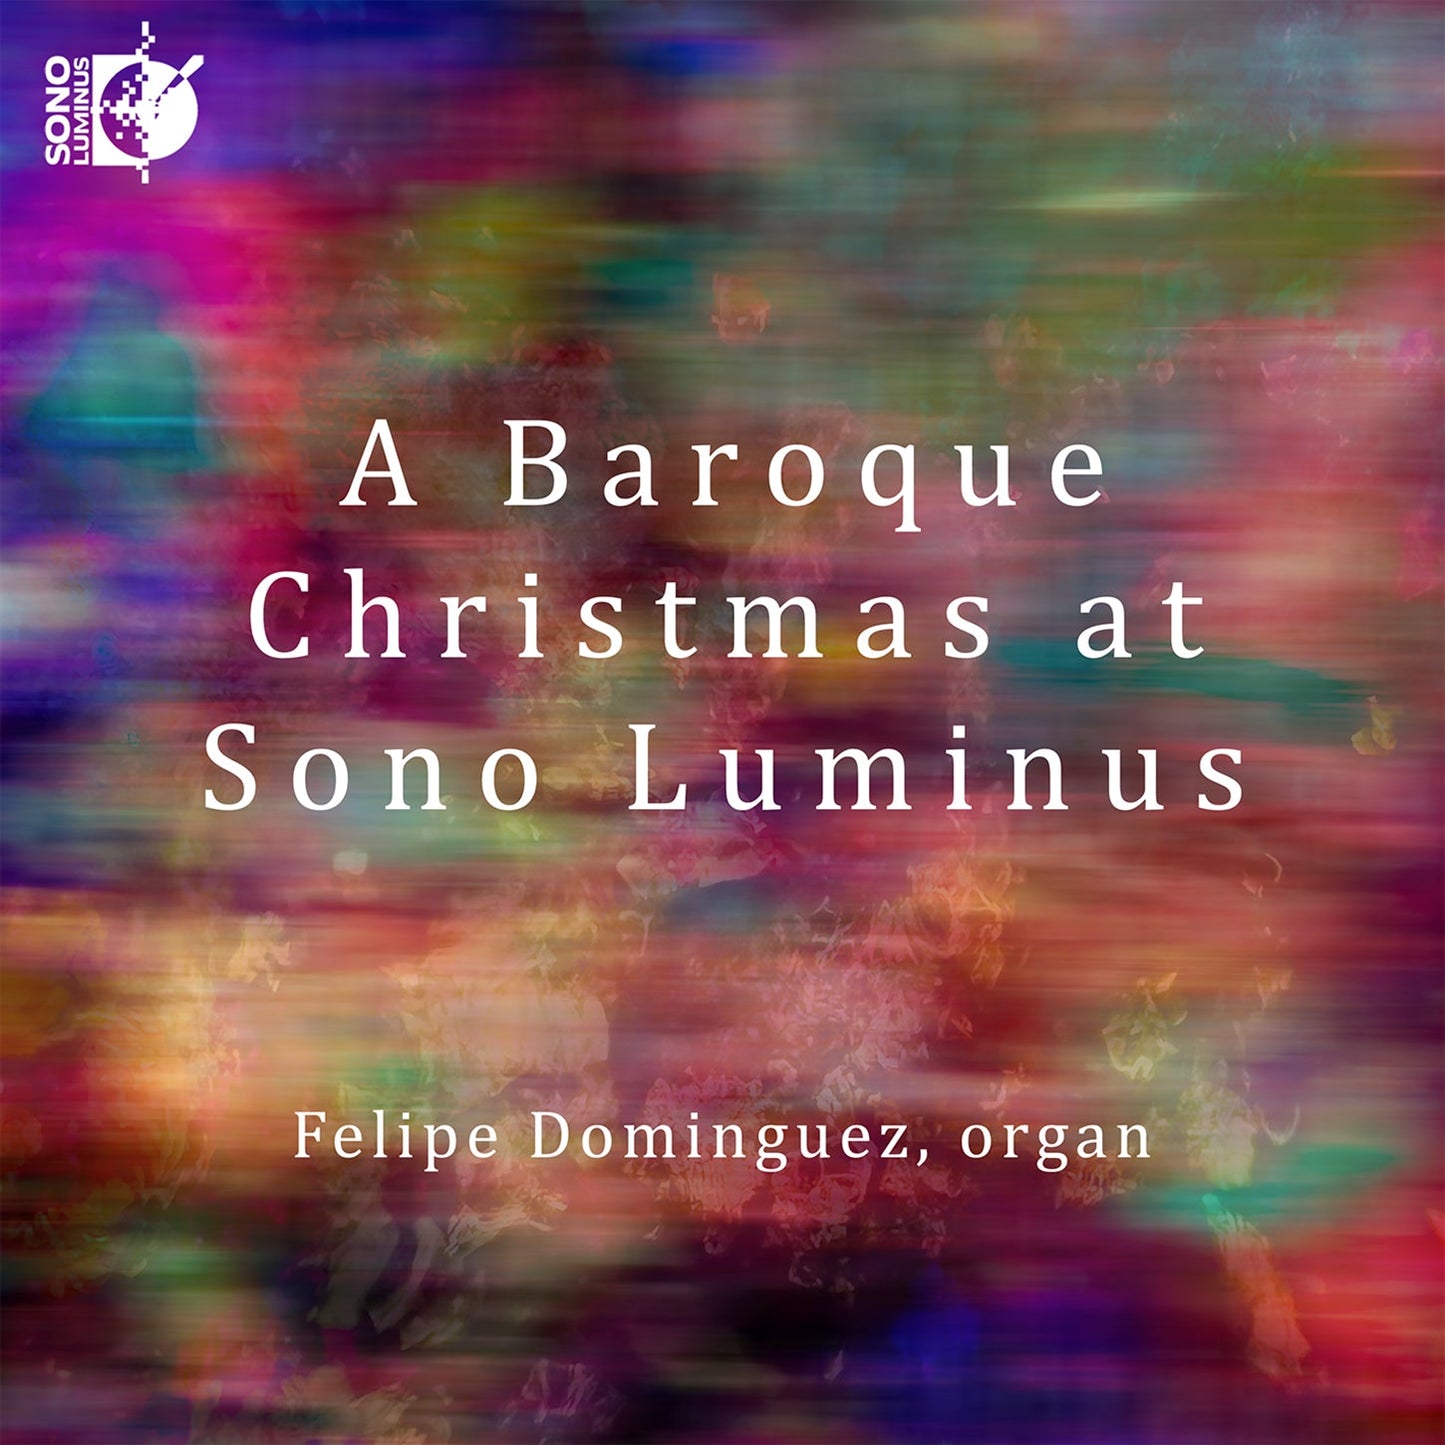 A Baroque Christmas at Sono Luminus / Felipe Dominguez